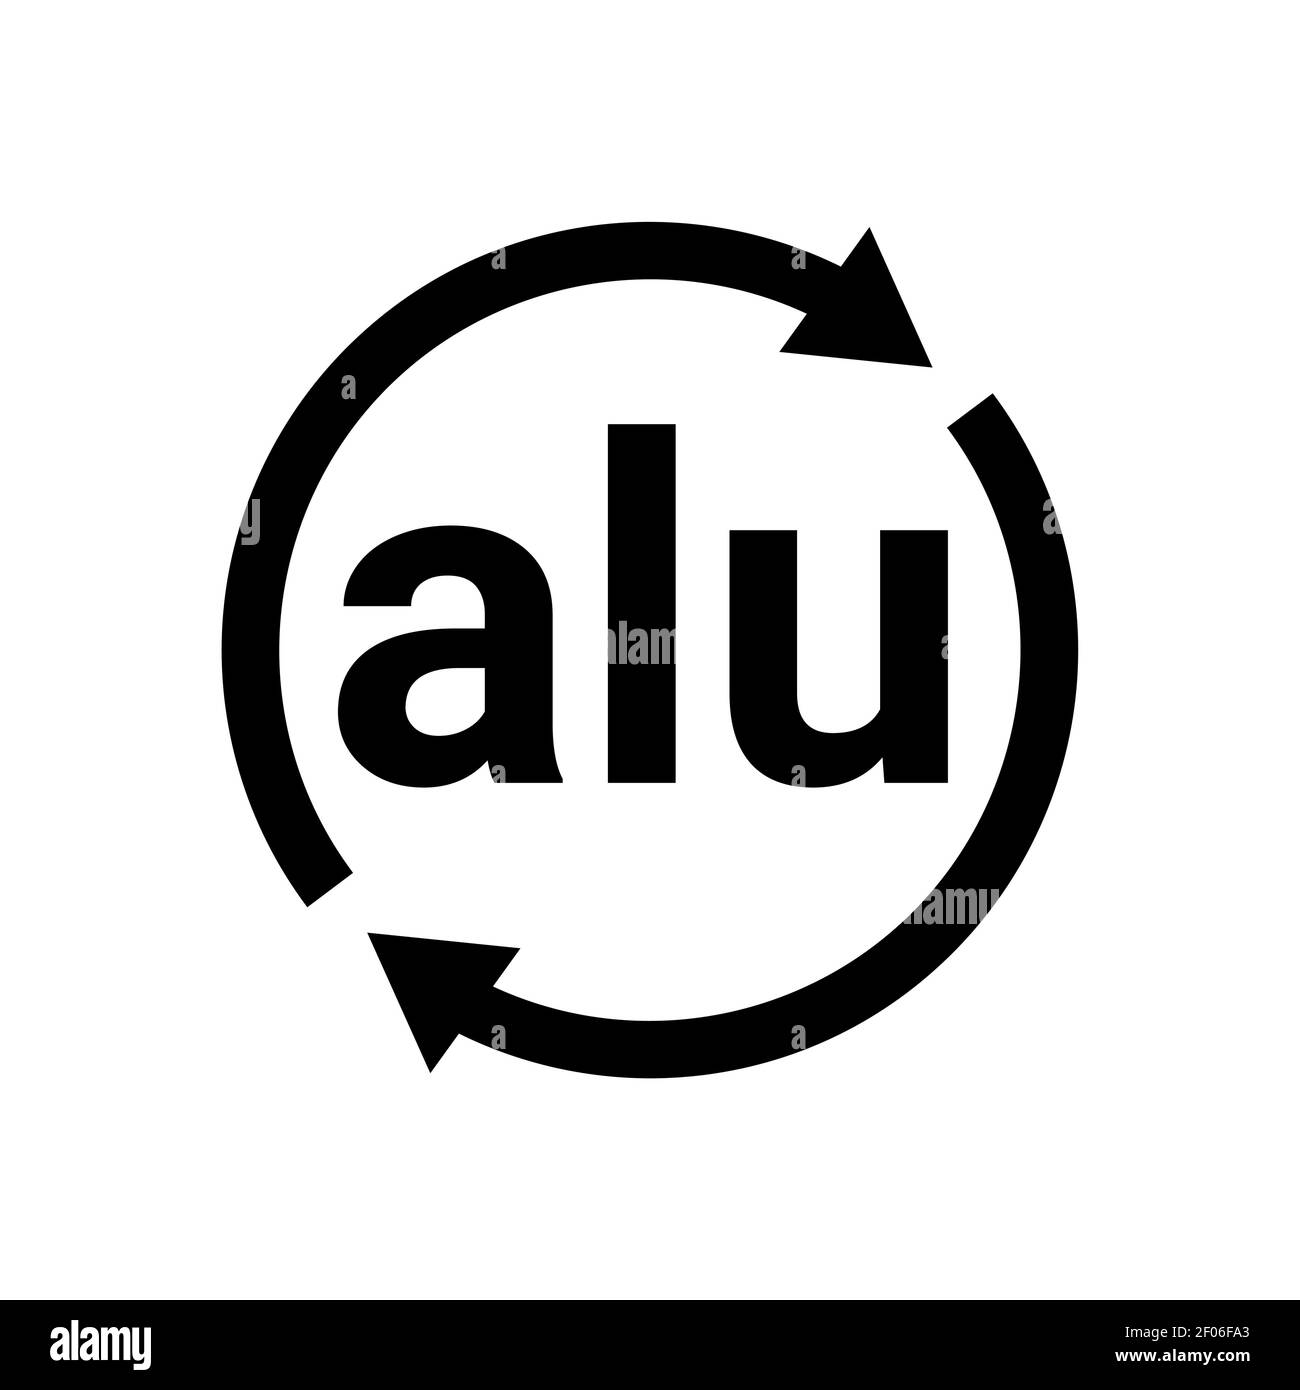 Icône de code de recyclage de l'aluminium. Symbole vectoriel de signe du logo Alu Illustration de Vecteur